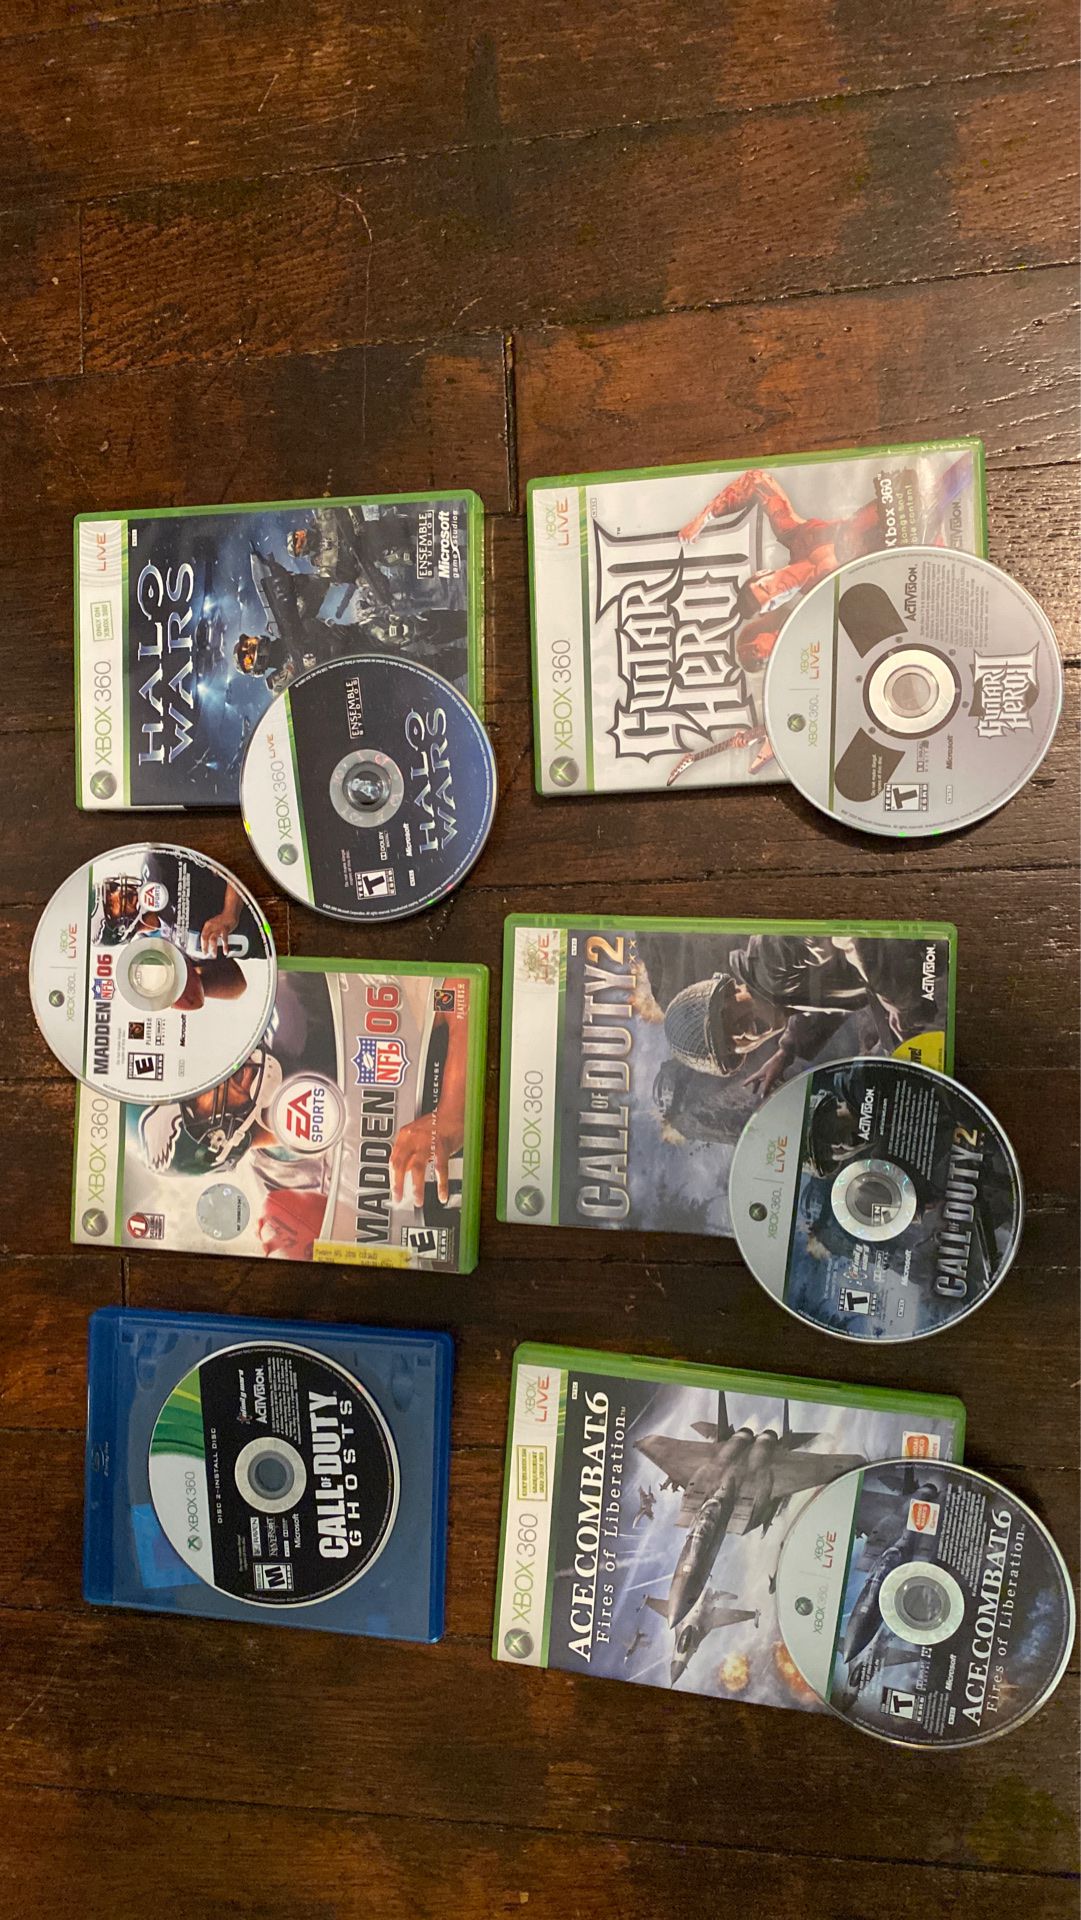 Xbox 360 video games